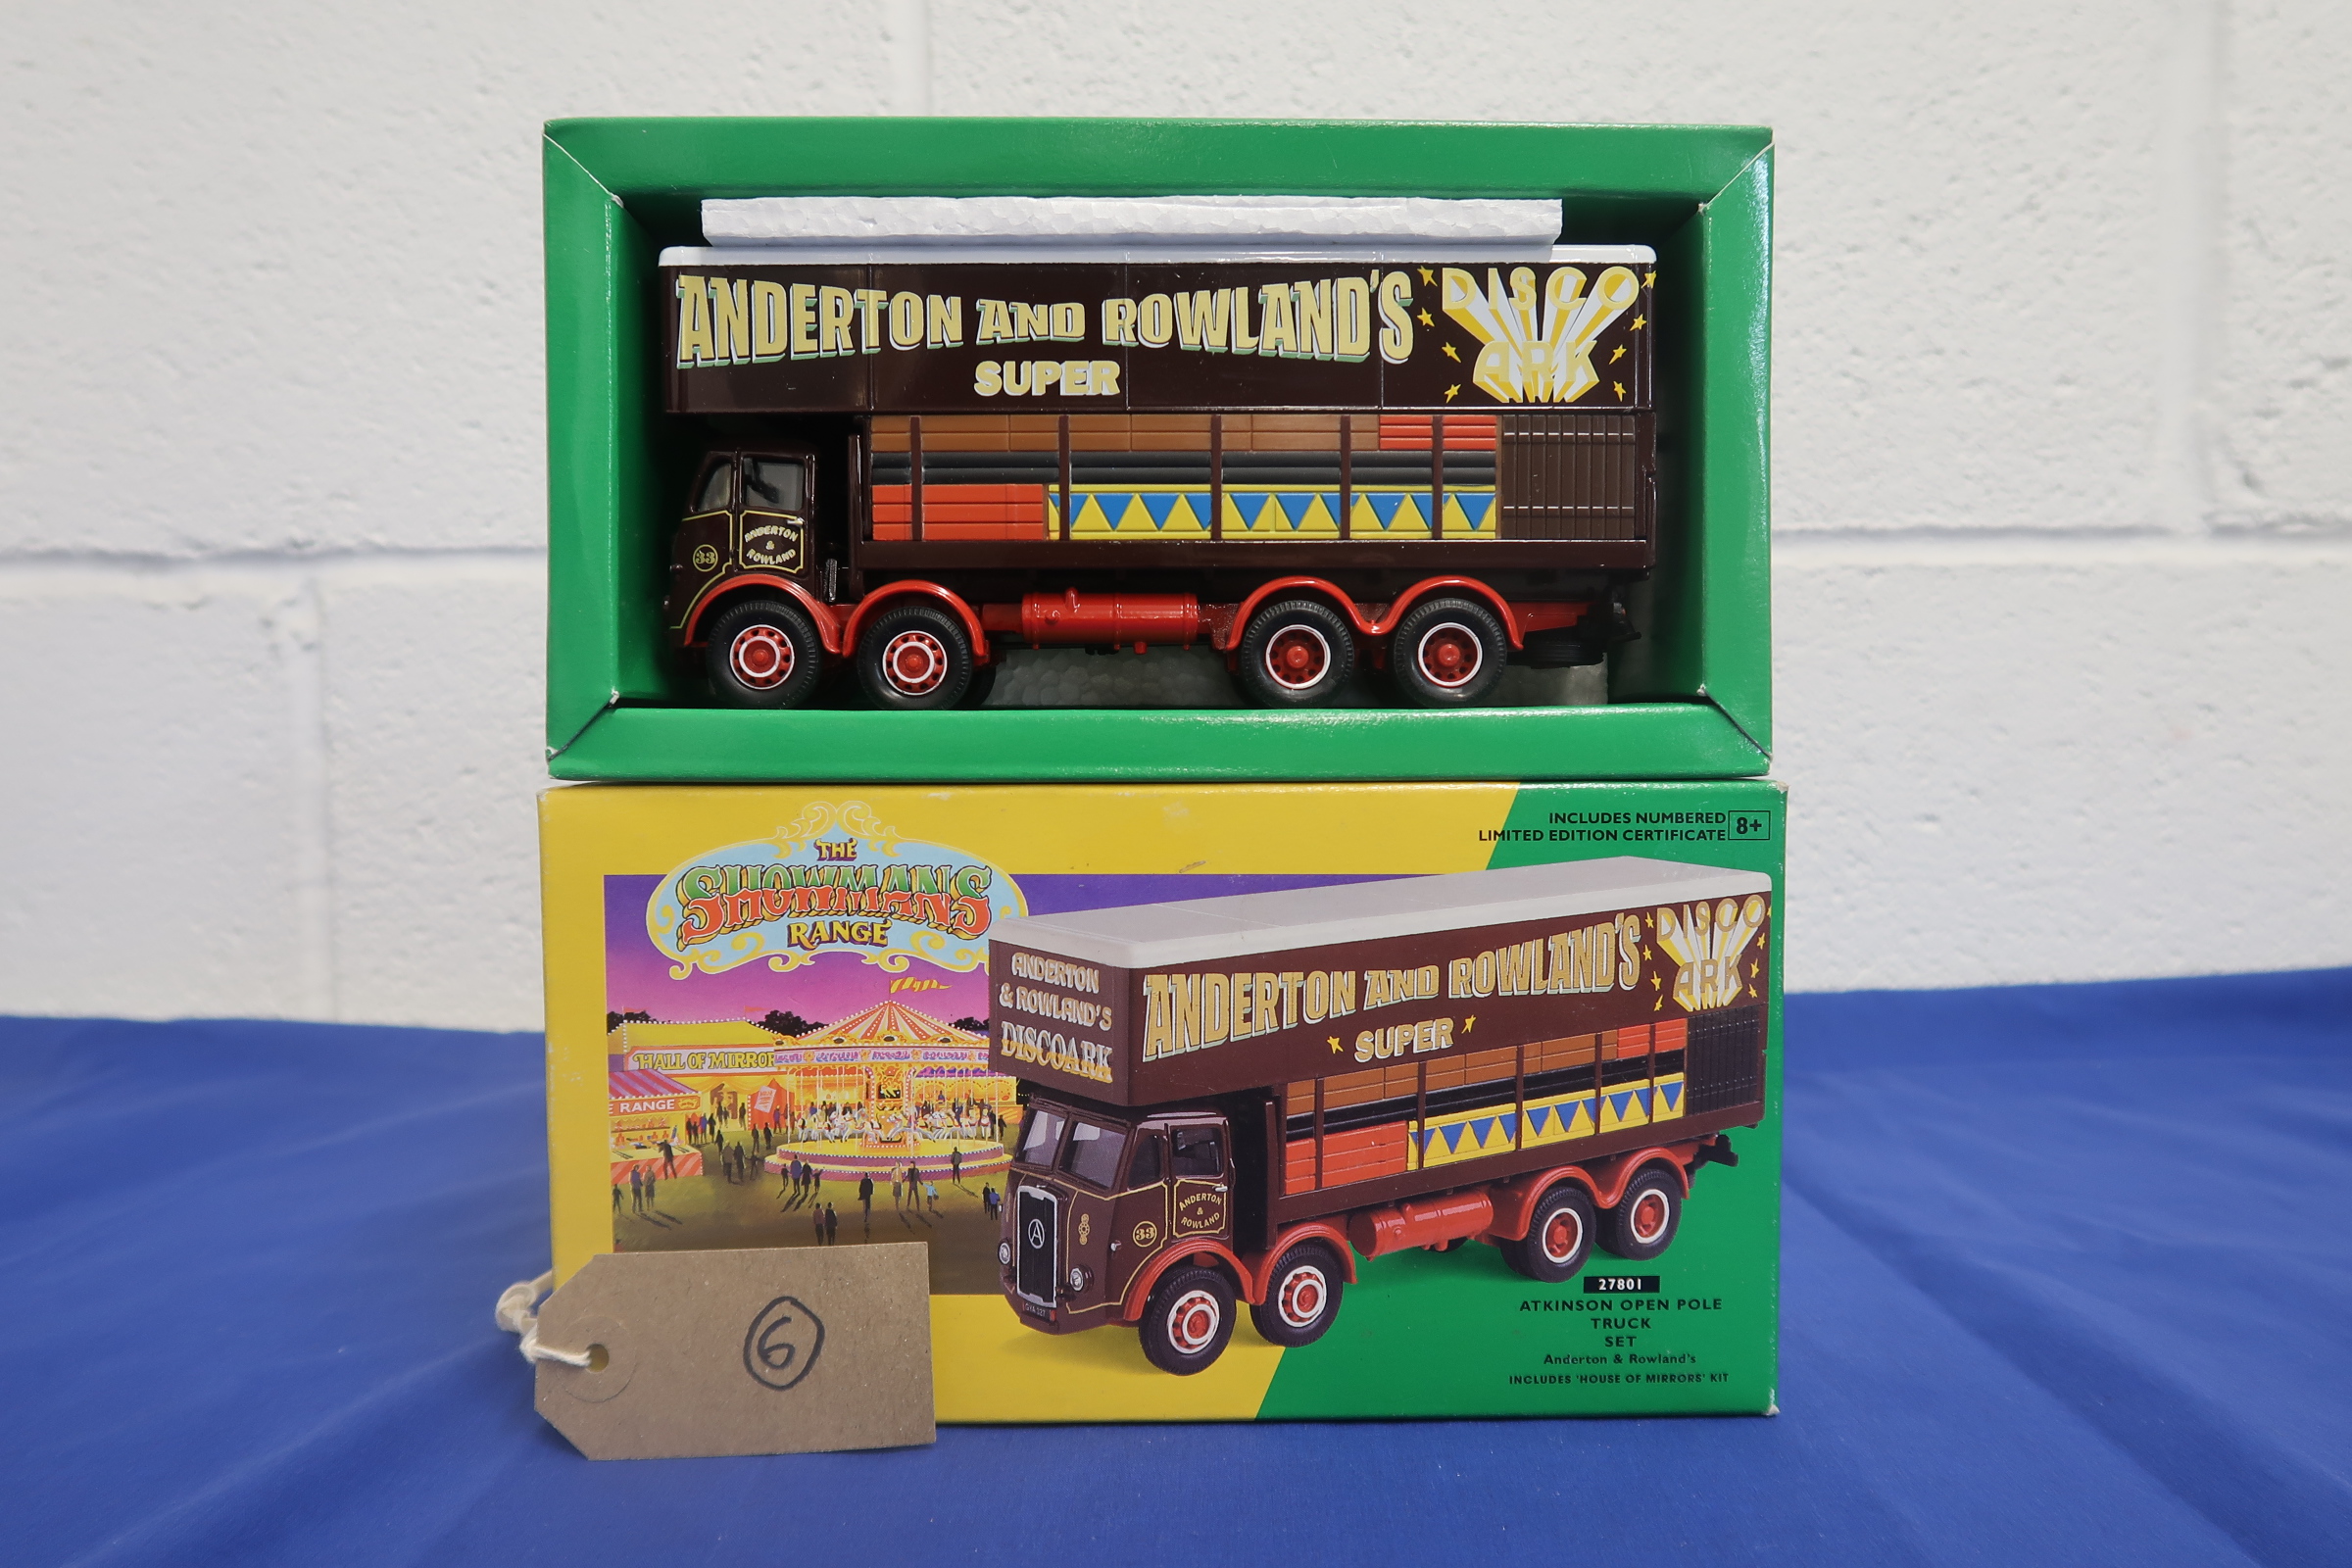 Corgi Atkinson Open Pole Truck Set/Anderton & Rowlands (Showmans) - Mint/Box Good